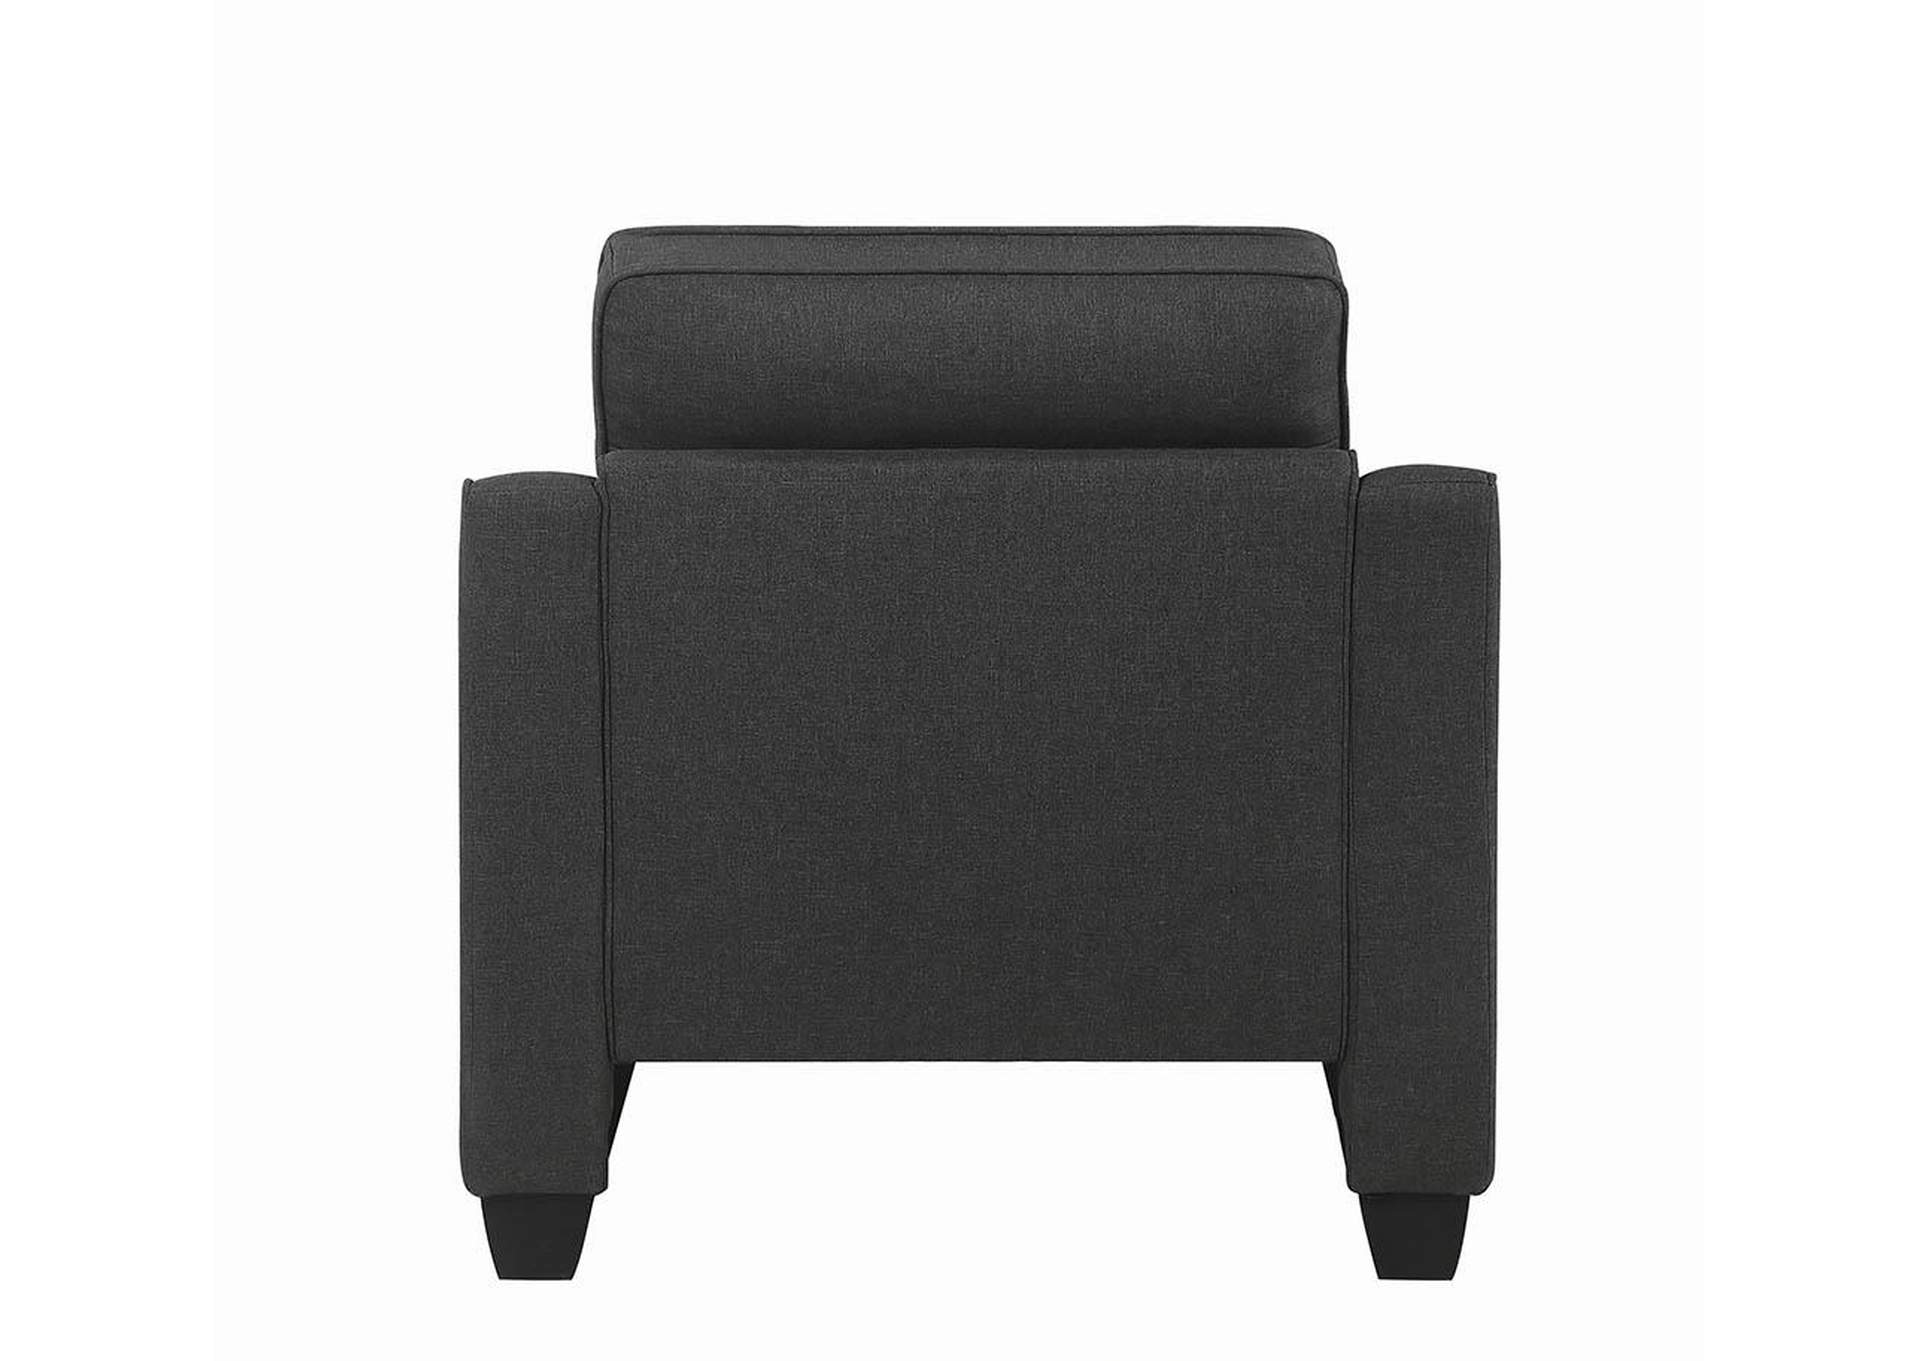 Nicolette Upholstered Tufted Chair Dark Grey,Coaster Furniture